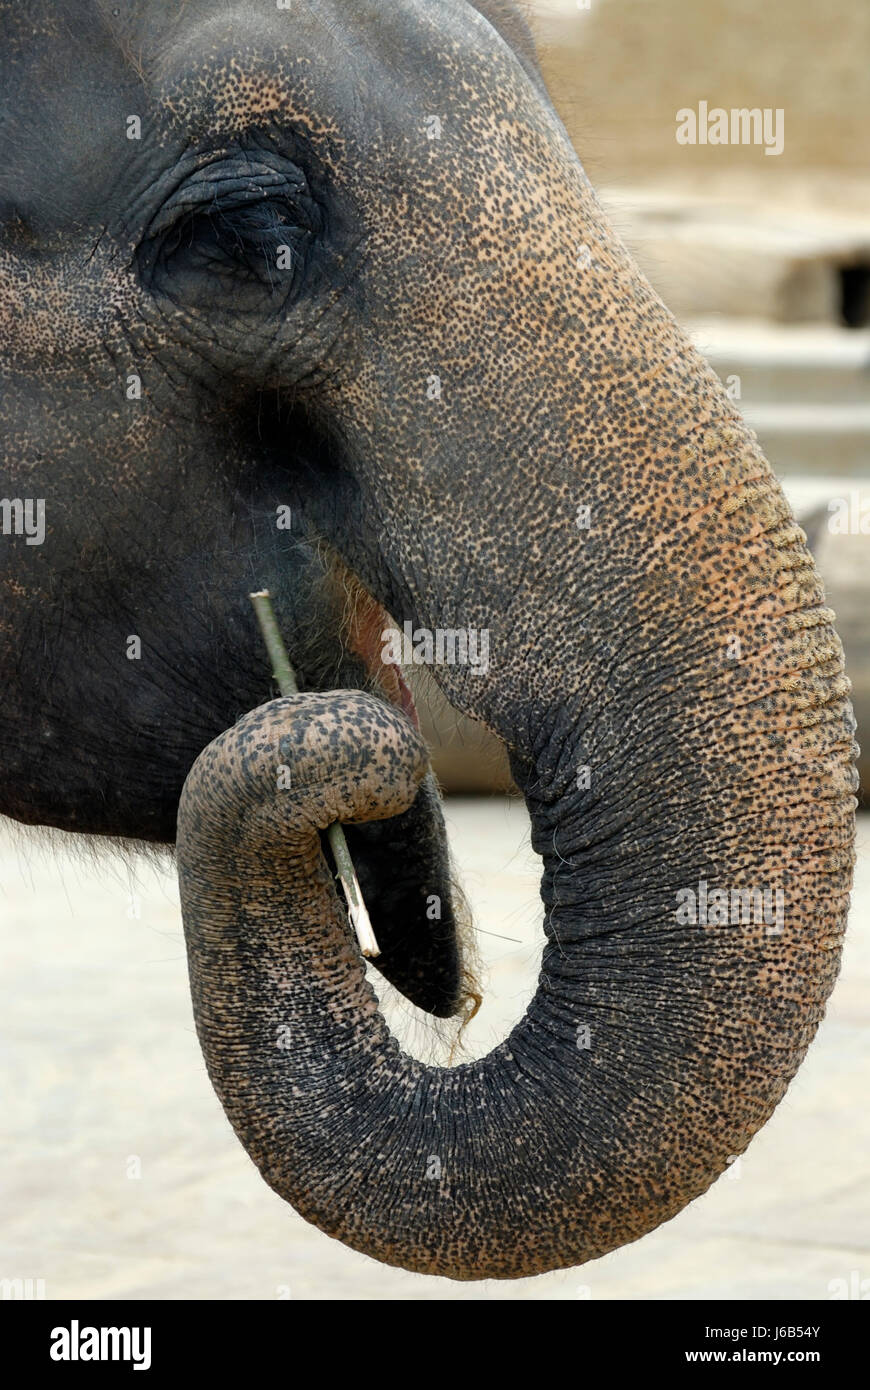 Tier Elefant Schlucht verschlingen verschlingen Rüssel schief verzogen buckligen Stockfoto